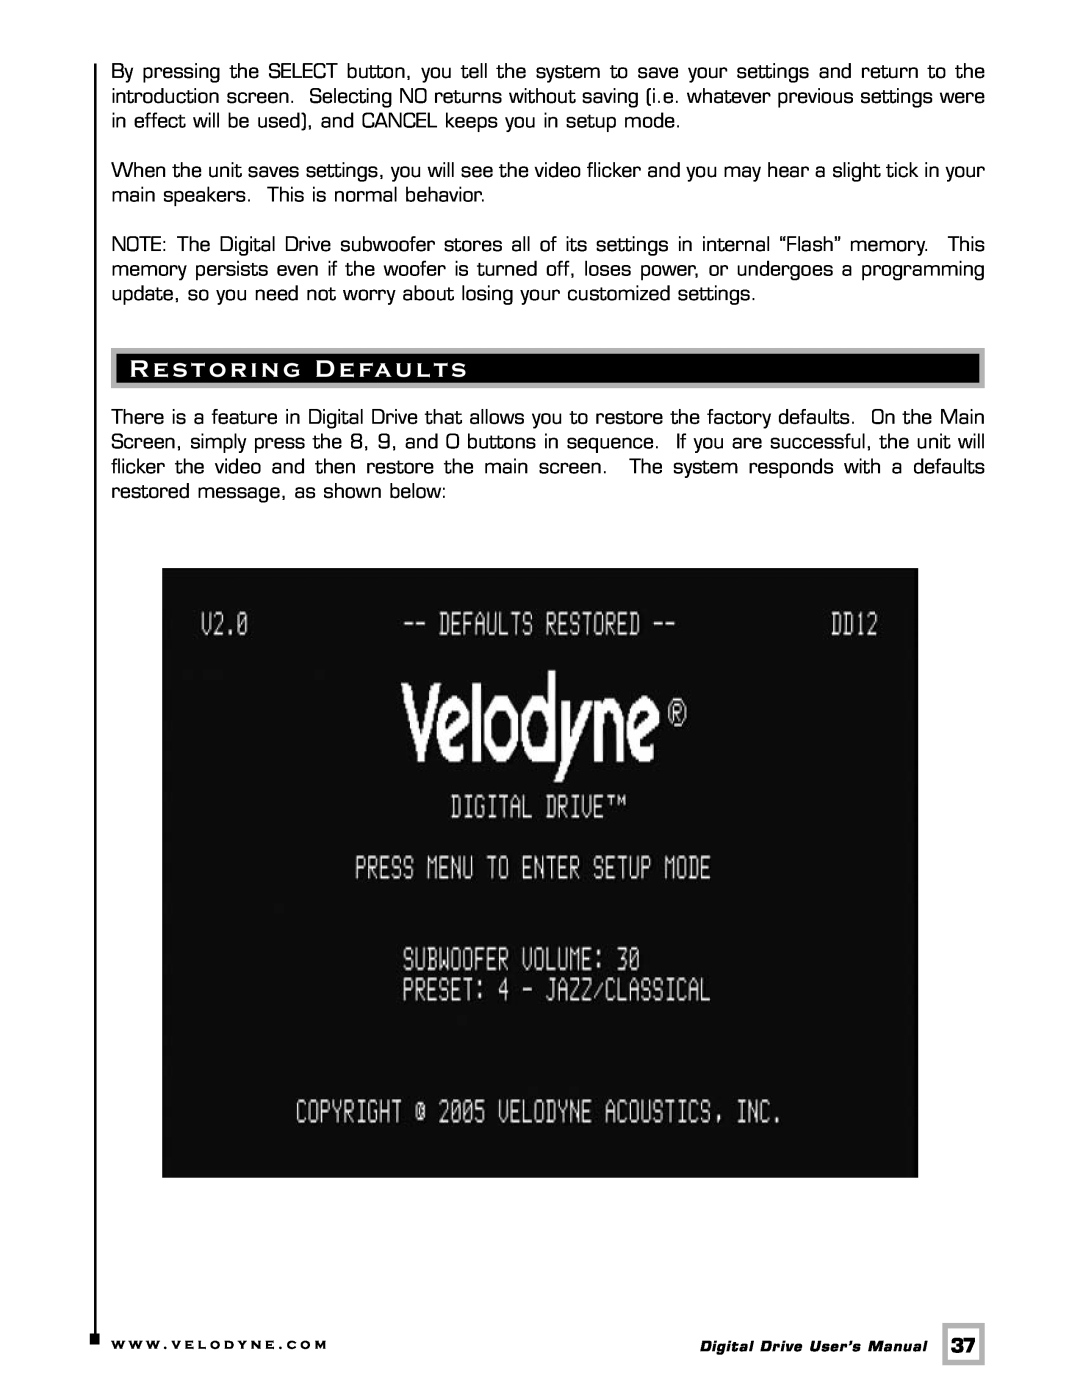 Velodyne Acoustics Digital Drive user manual Restoring Defaults 